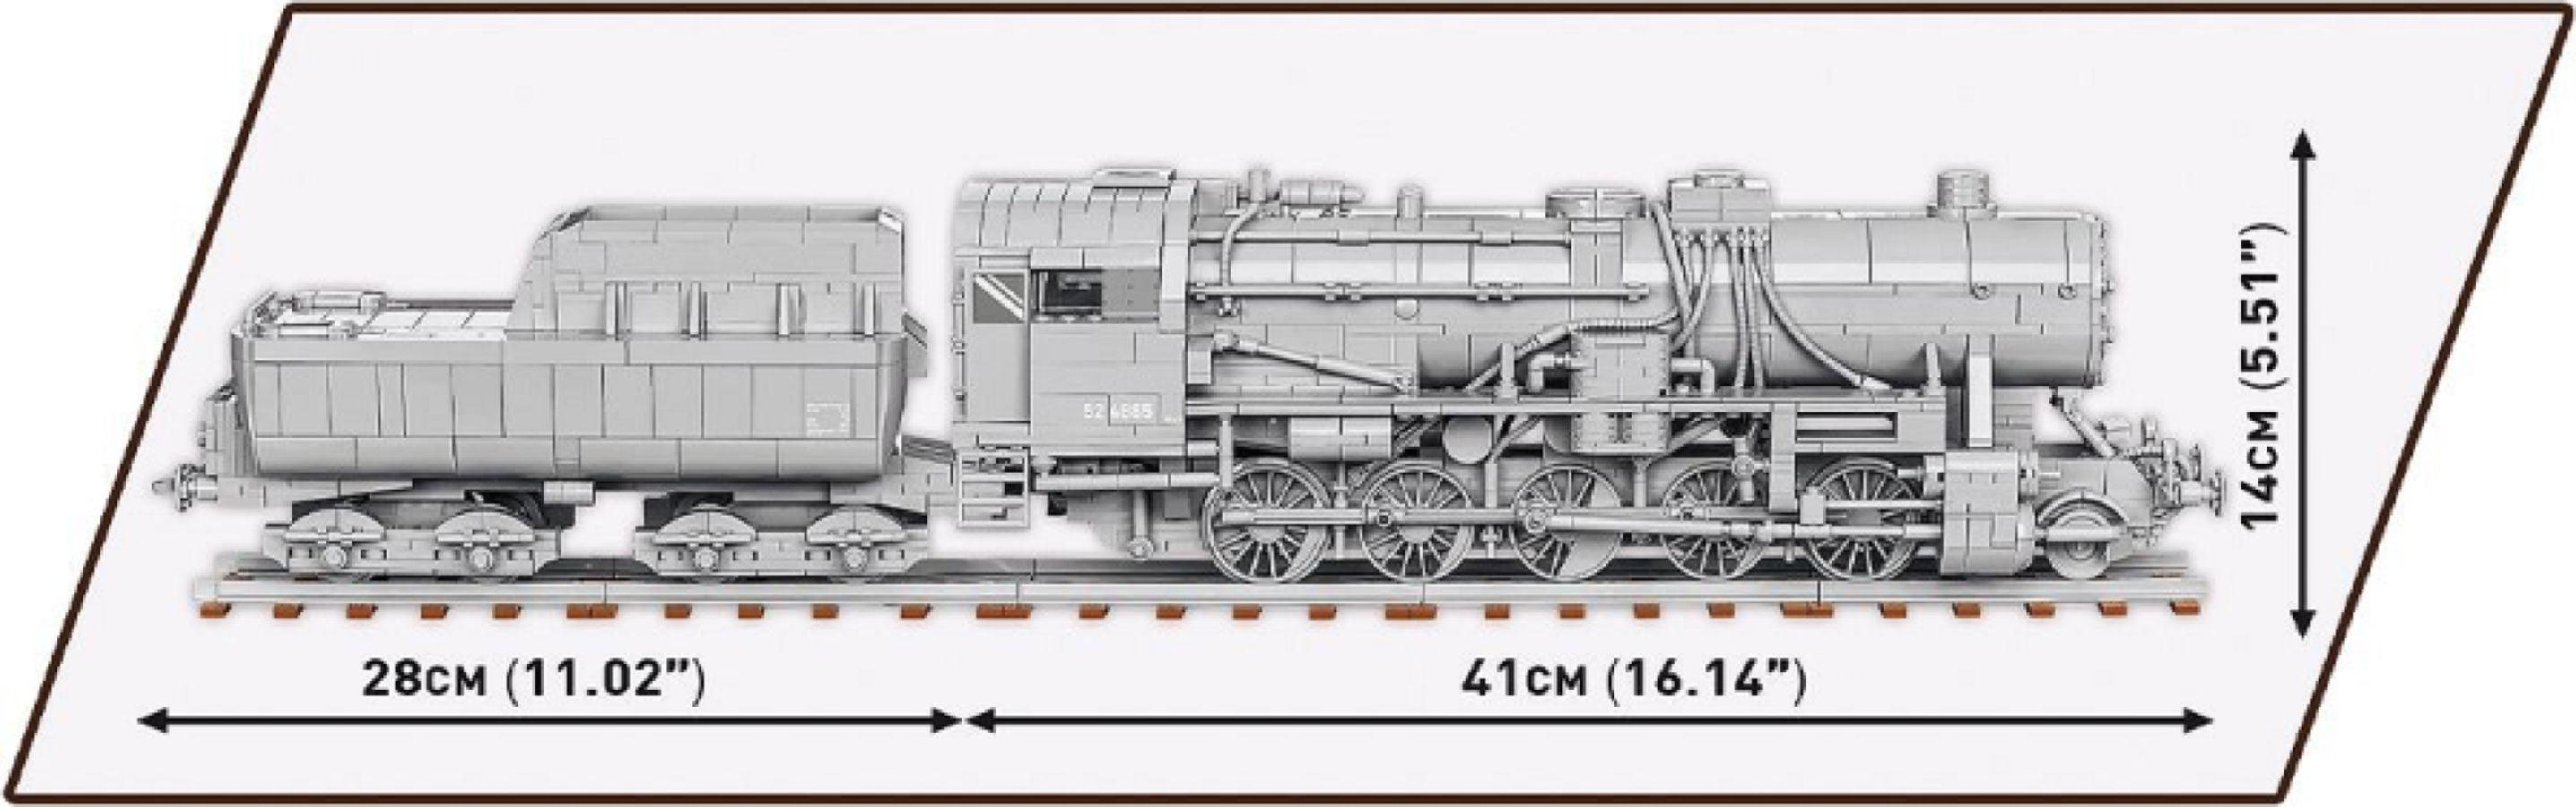 COB6281 Trains - Kriegslokomotive Baureihe 52 Locomotive 1:35 Scale [2476 Pcs] - Cobi - Titan Pop Culture